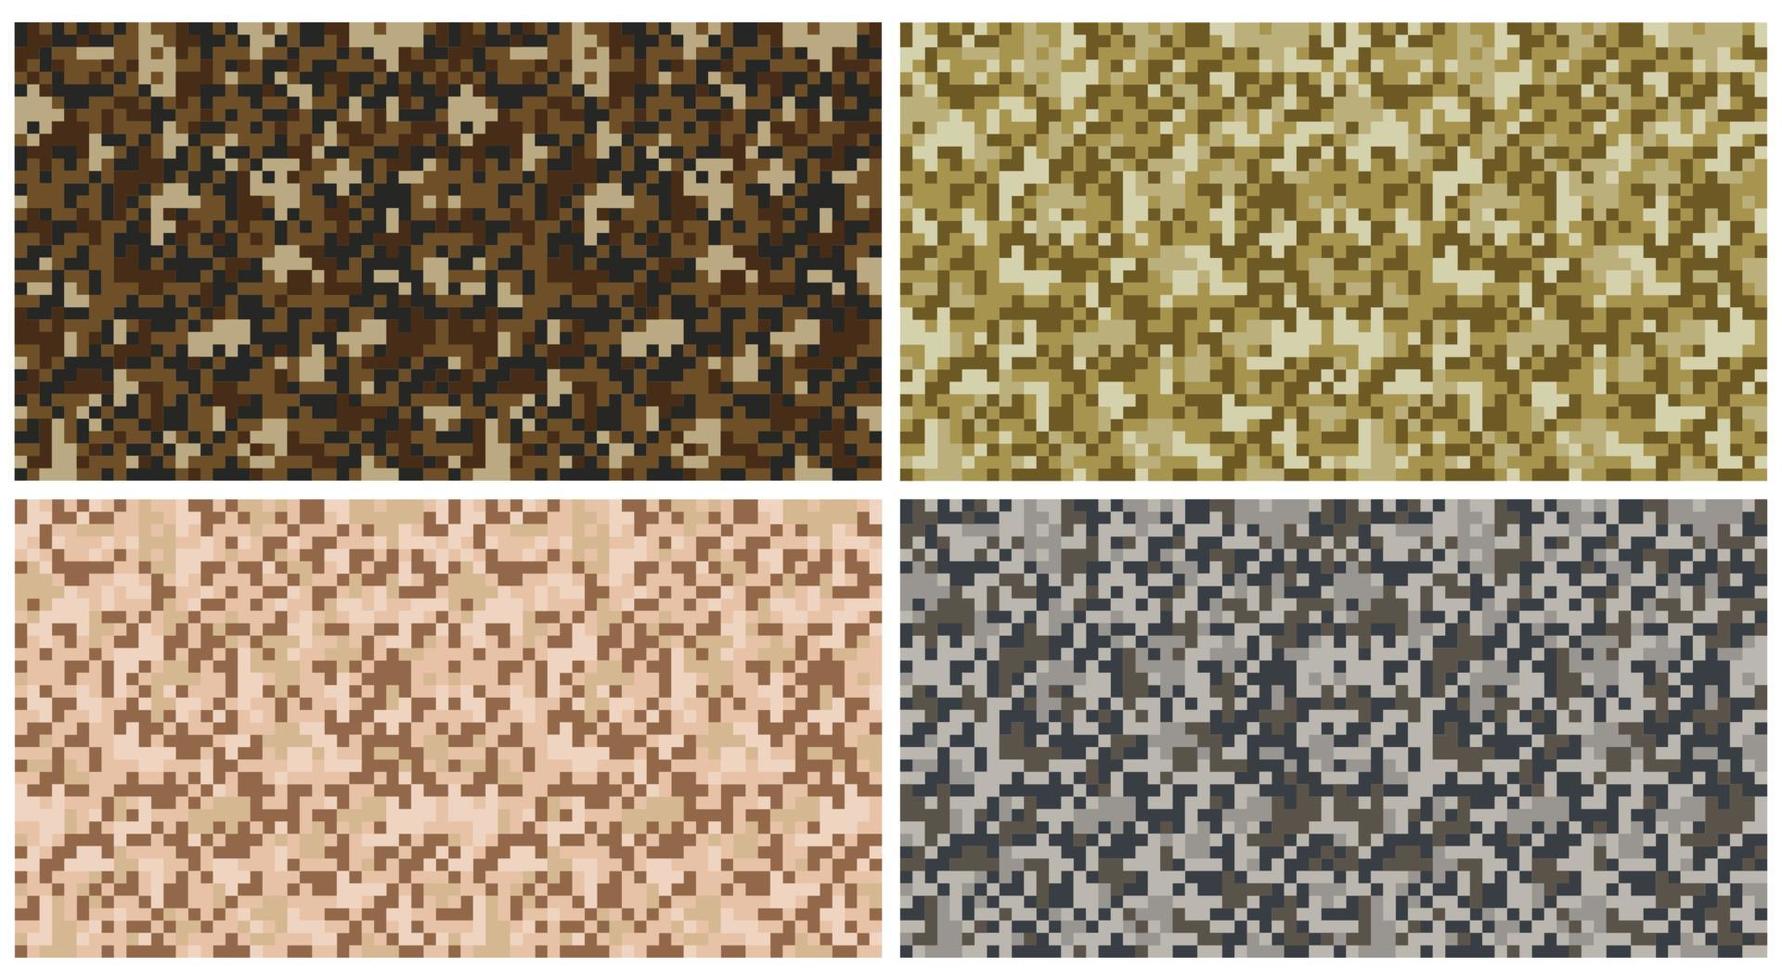 moderno pixelado digital de moda camuflaje patrón, vector ilustración impresión. sin costura vector fondo de pantalla antecedentes